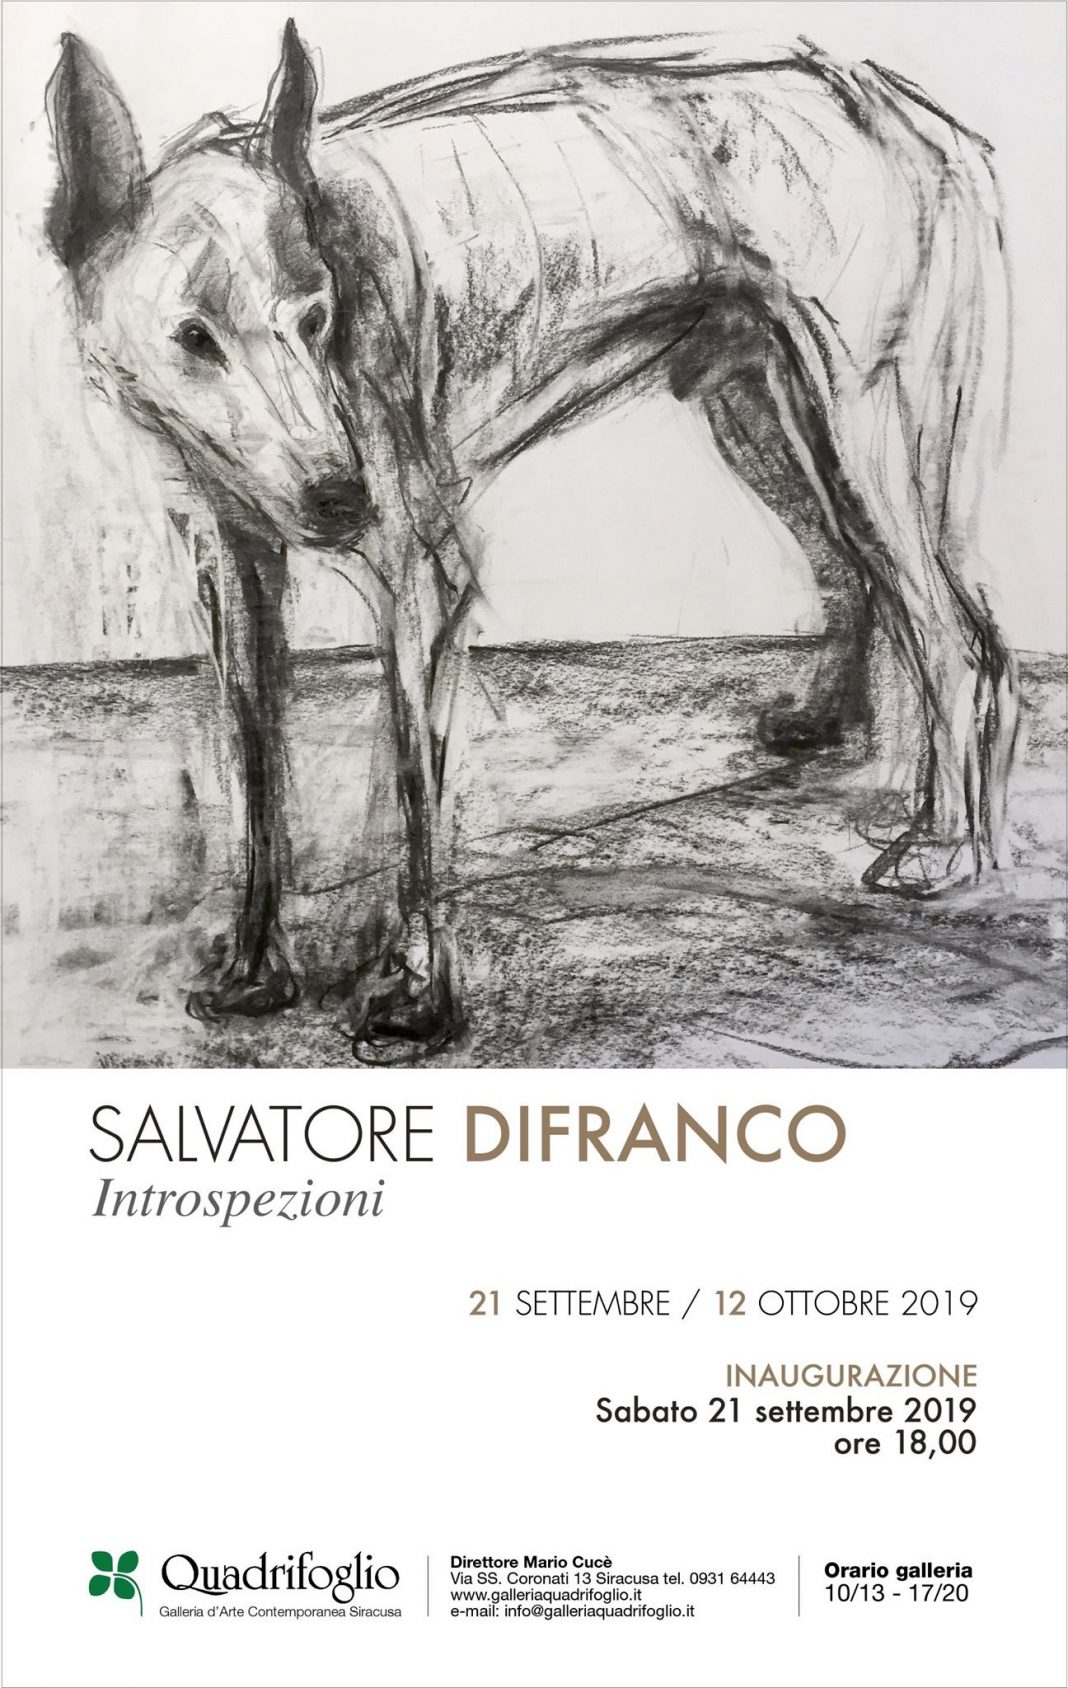 Salvatore Difranco – Introspezionihttps://www.exibart.com/repository/media/formidable/11/IMG-9855-1068x1688.jpg